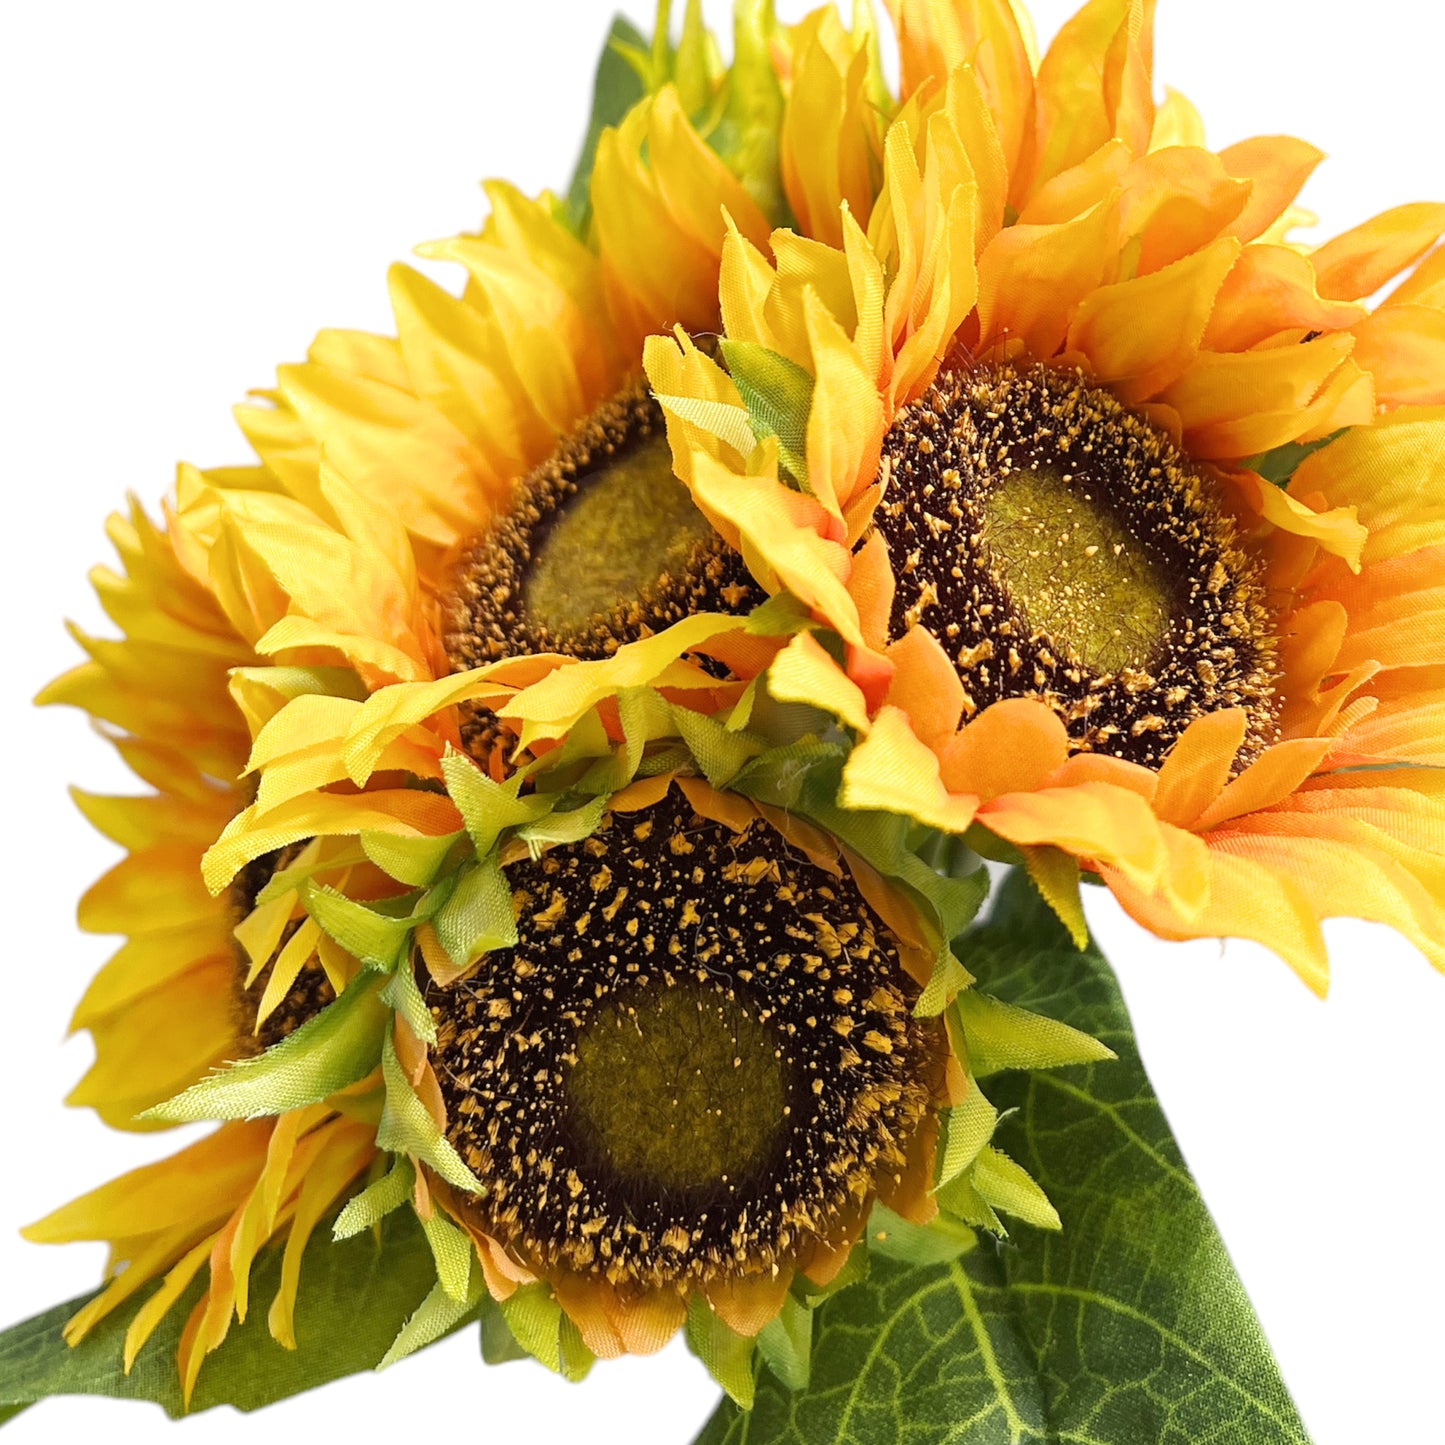 Artificial Sunflower Floral Arrangement with 7 Stems